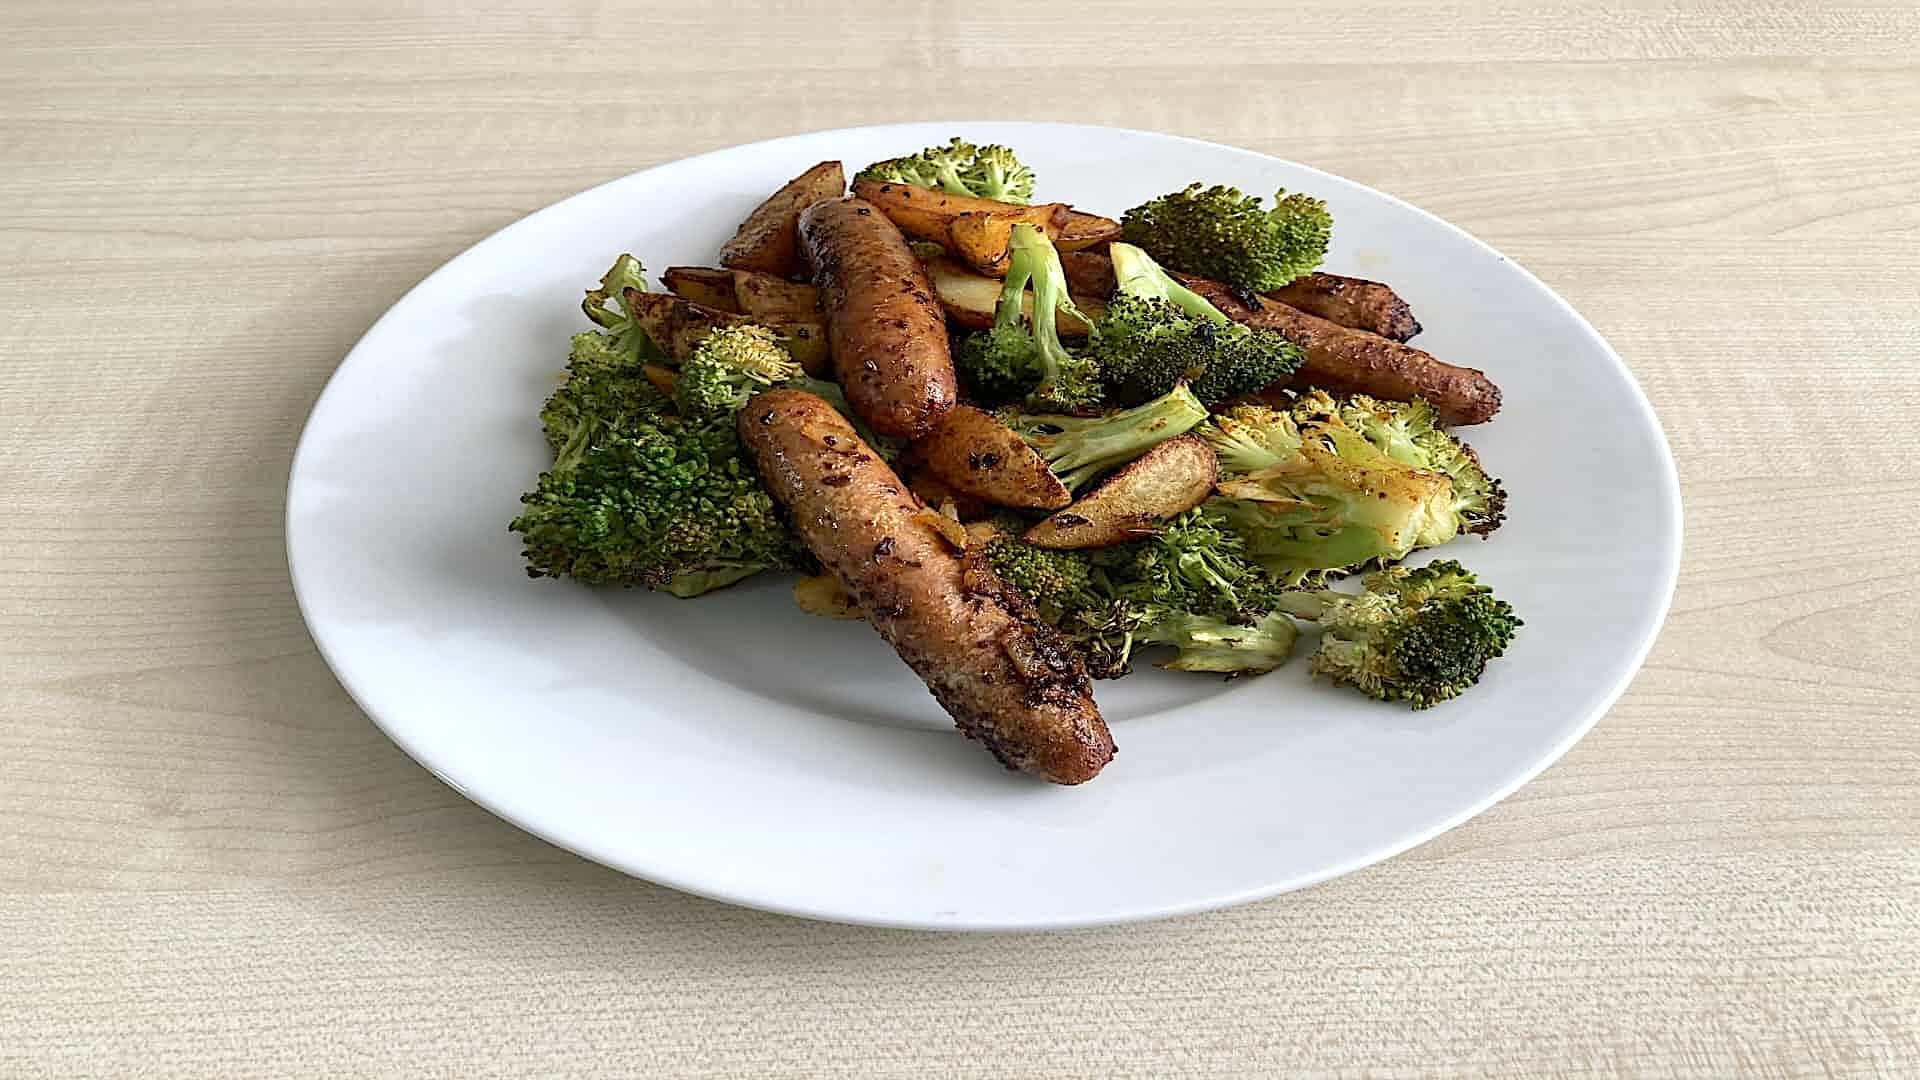 Traybake chipolata worstjes met broccoli en aardappelpartjes